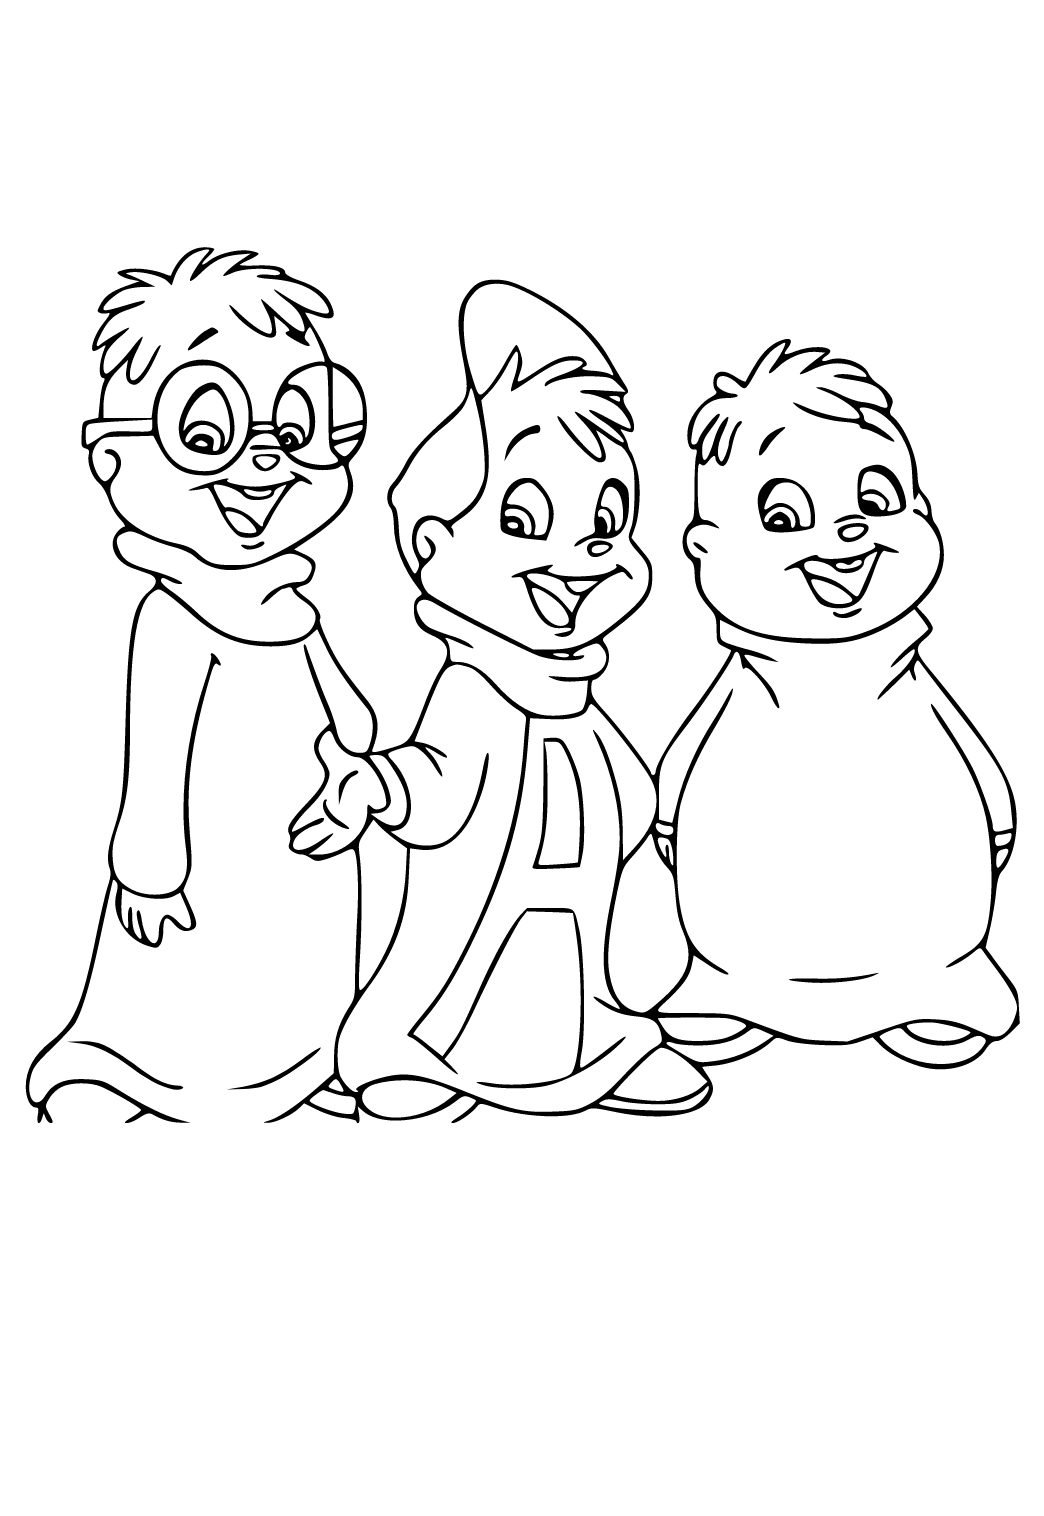 Alvin dan the Chipmunks